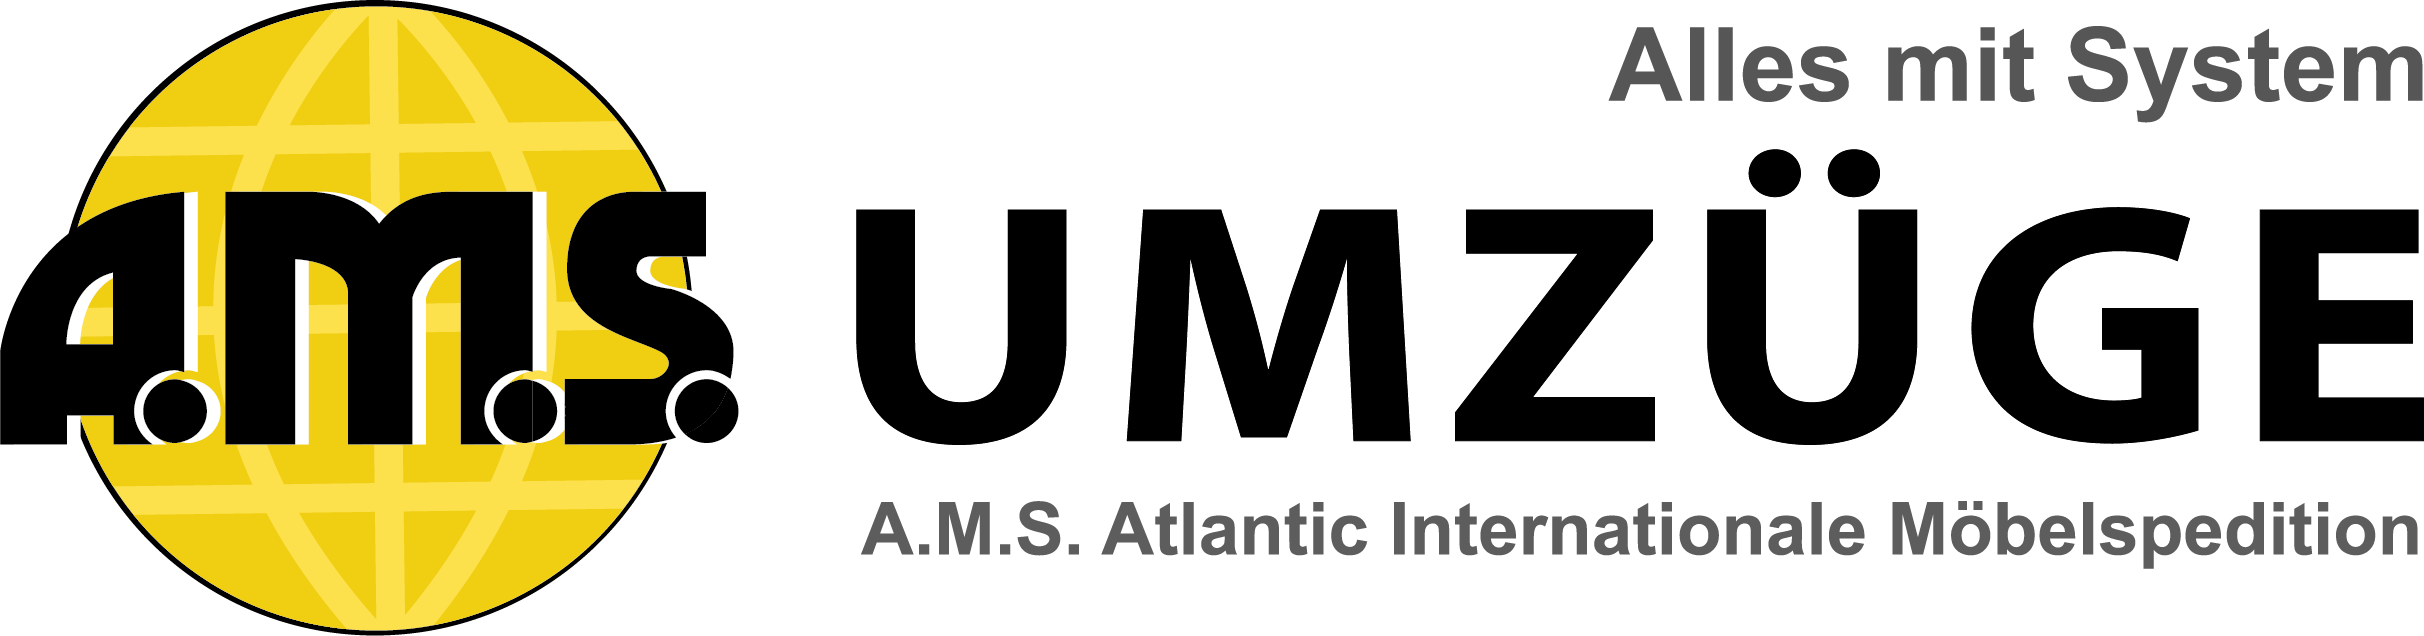 AMS Logo Auswahl 0921 03 pfade markoon werbeagentur